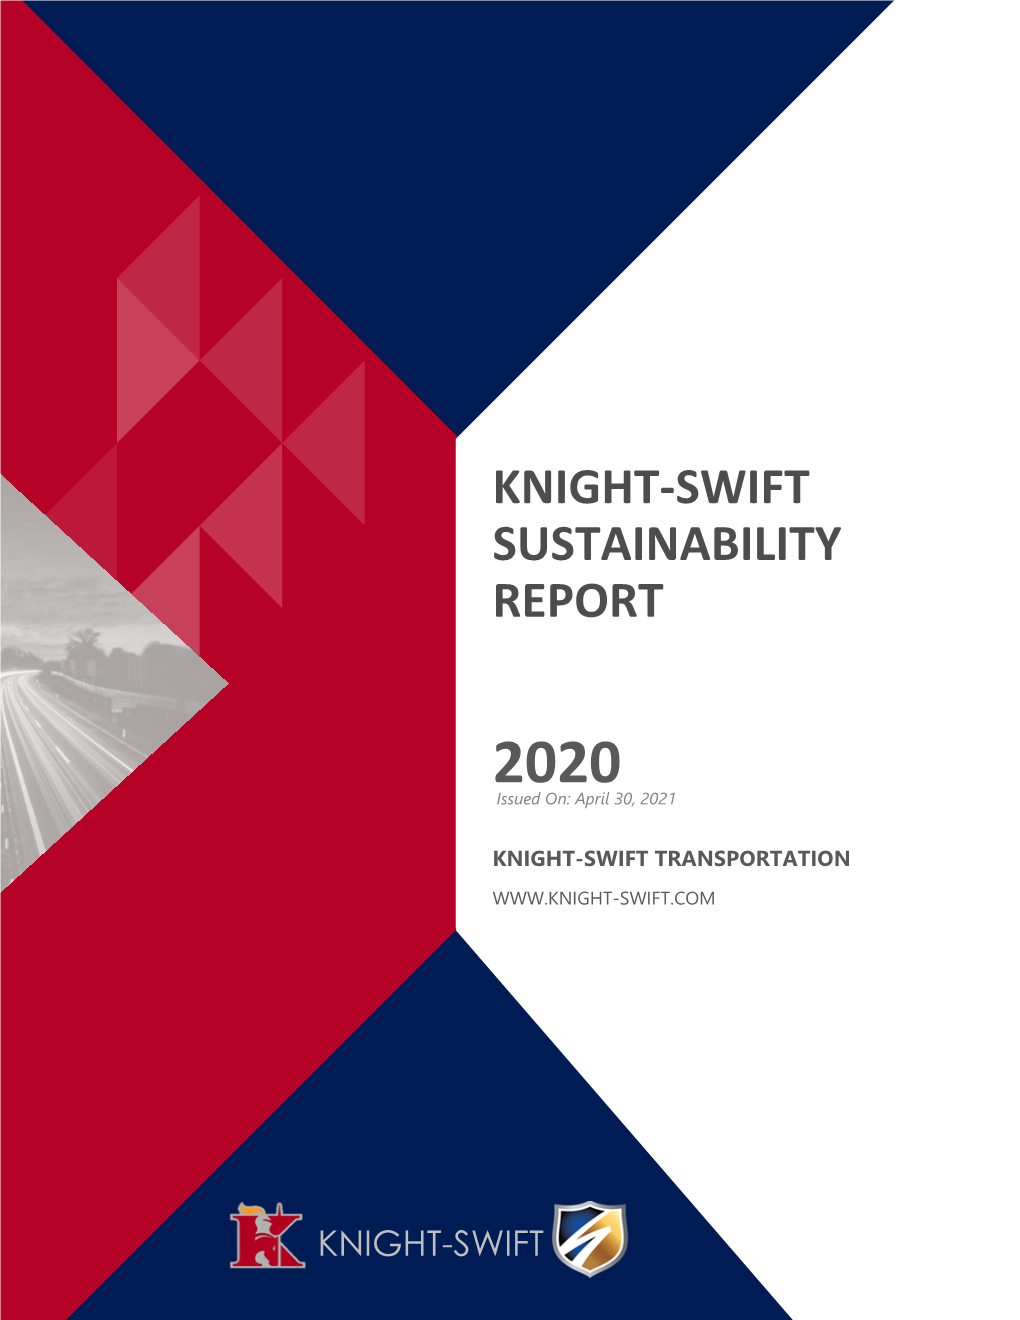 Knight-Swift Sustainability Report